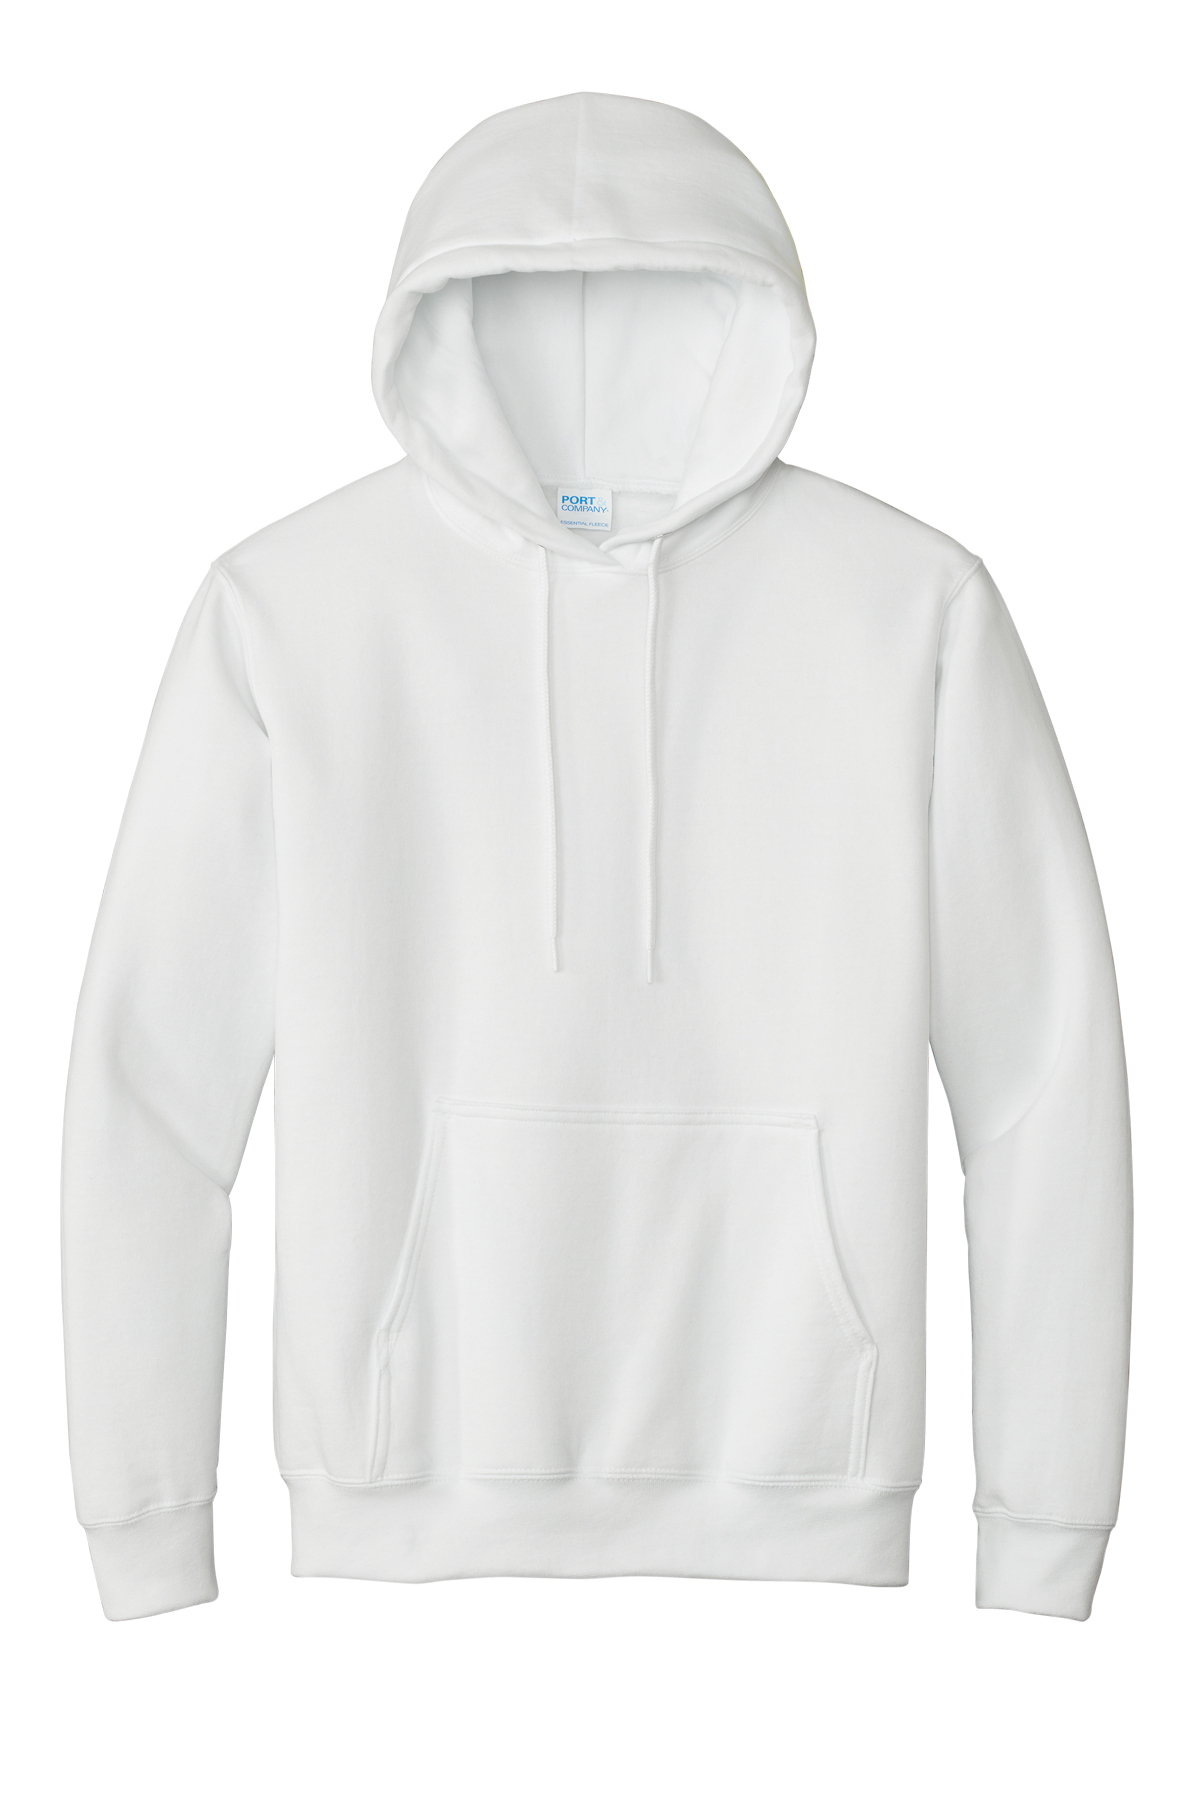 Port & Company Essential Fleece Pullover Hooded Sweatshirt | Product ...